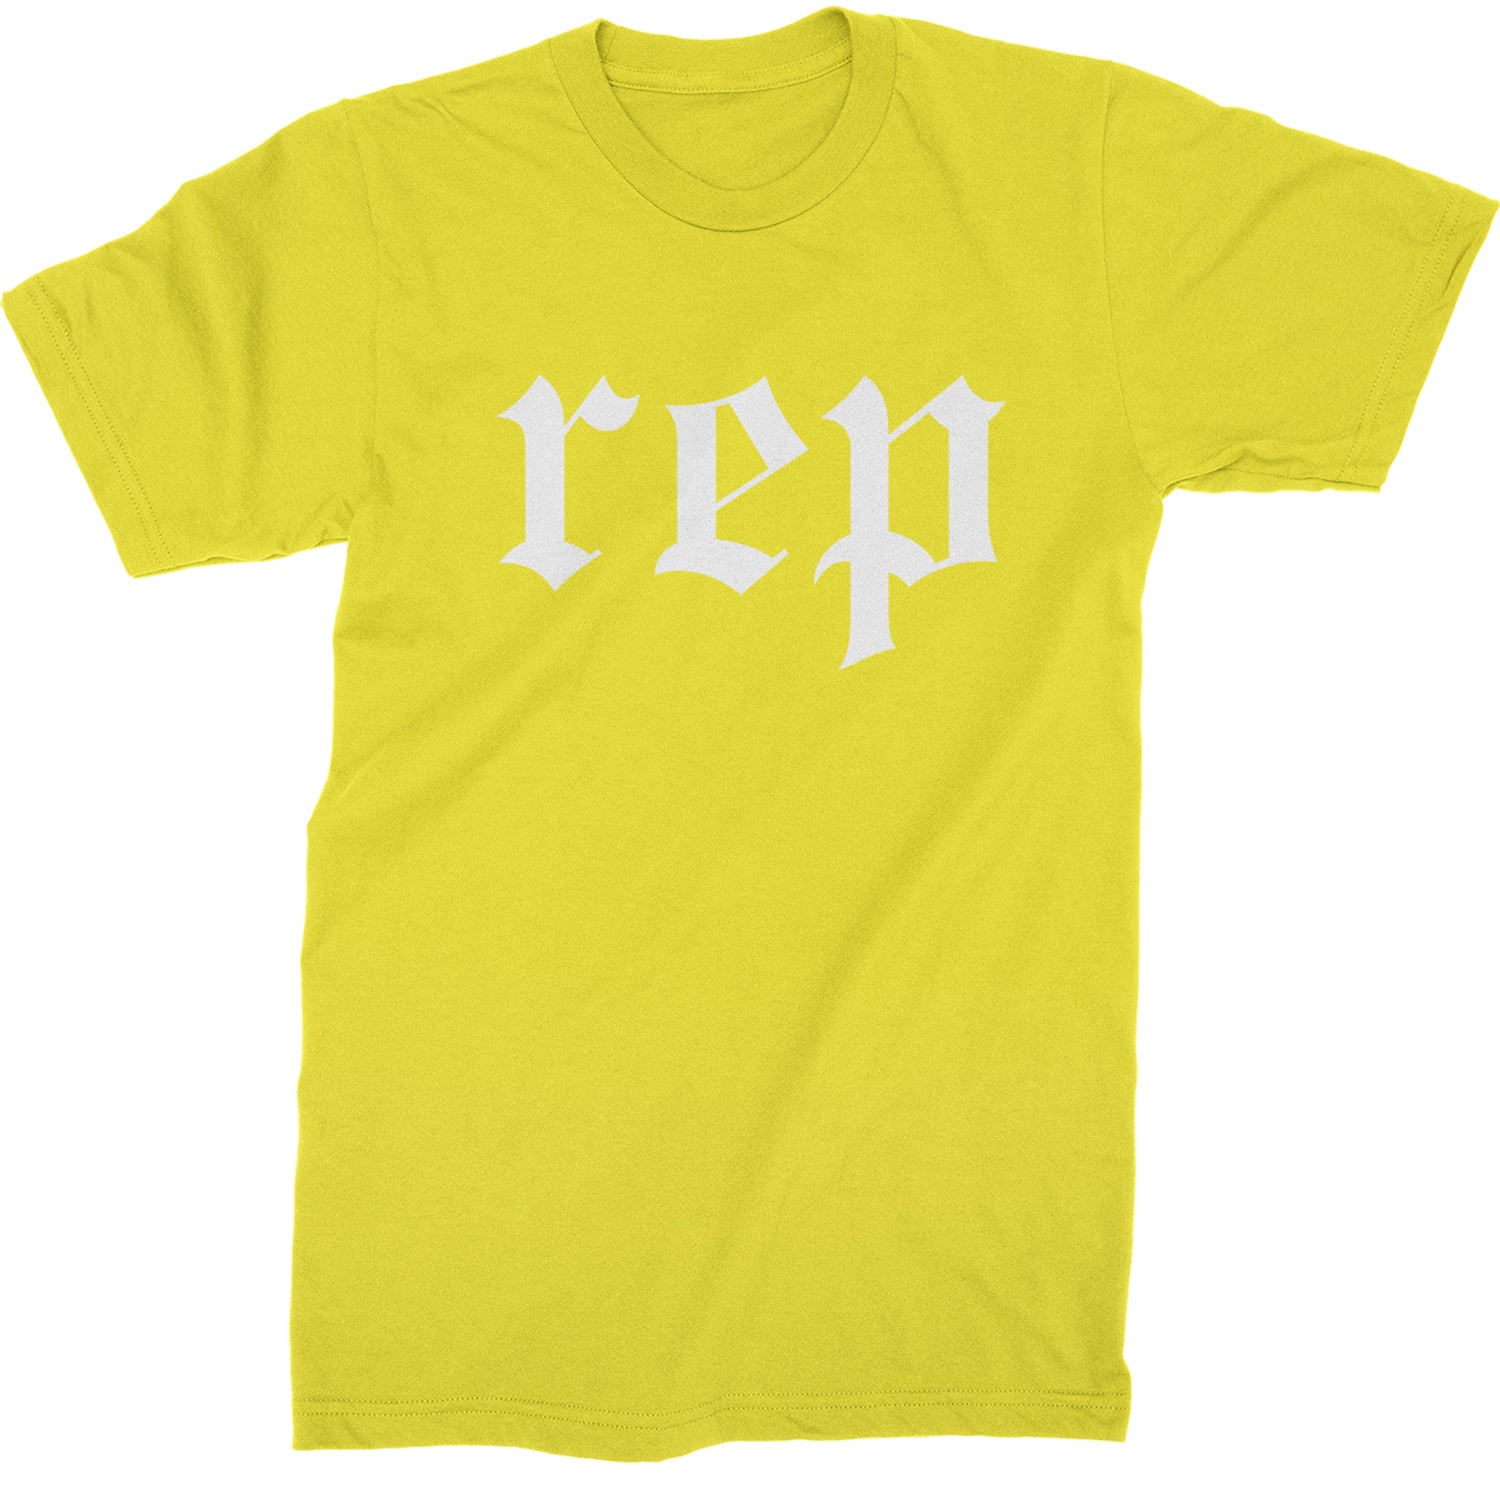 REP Reputation Eras Music Lover Gift Fan Favorite Mens T-shirt Yellow